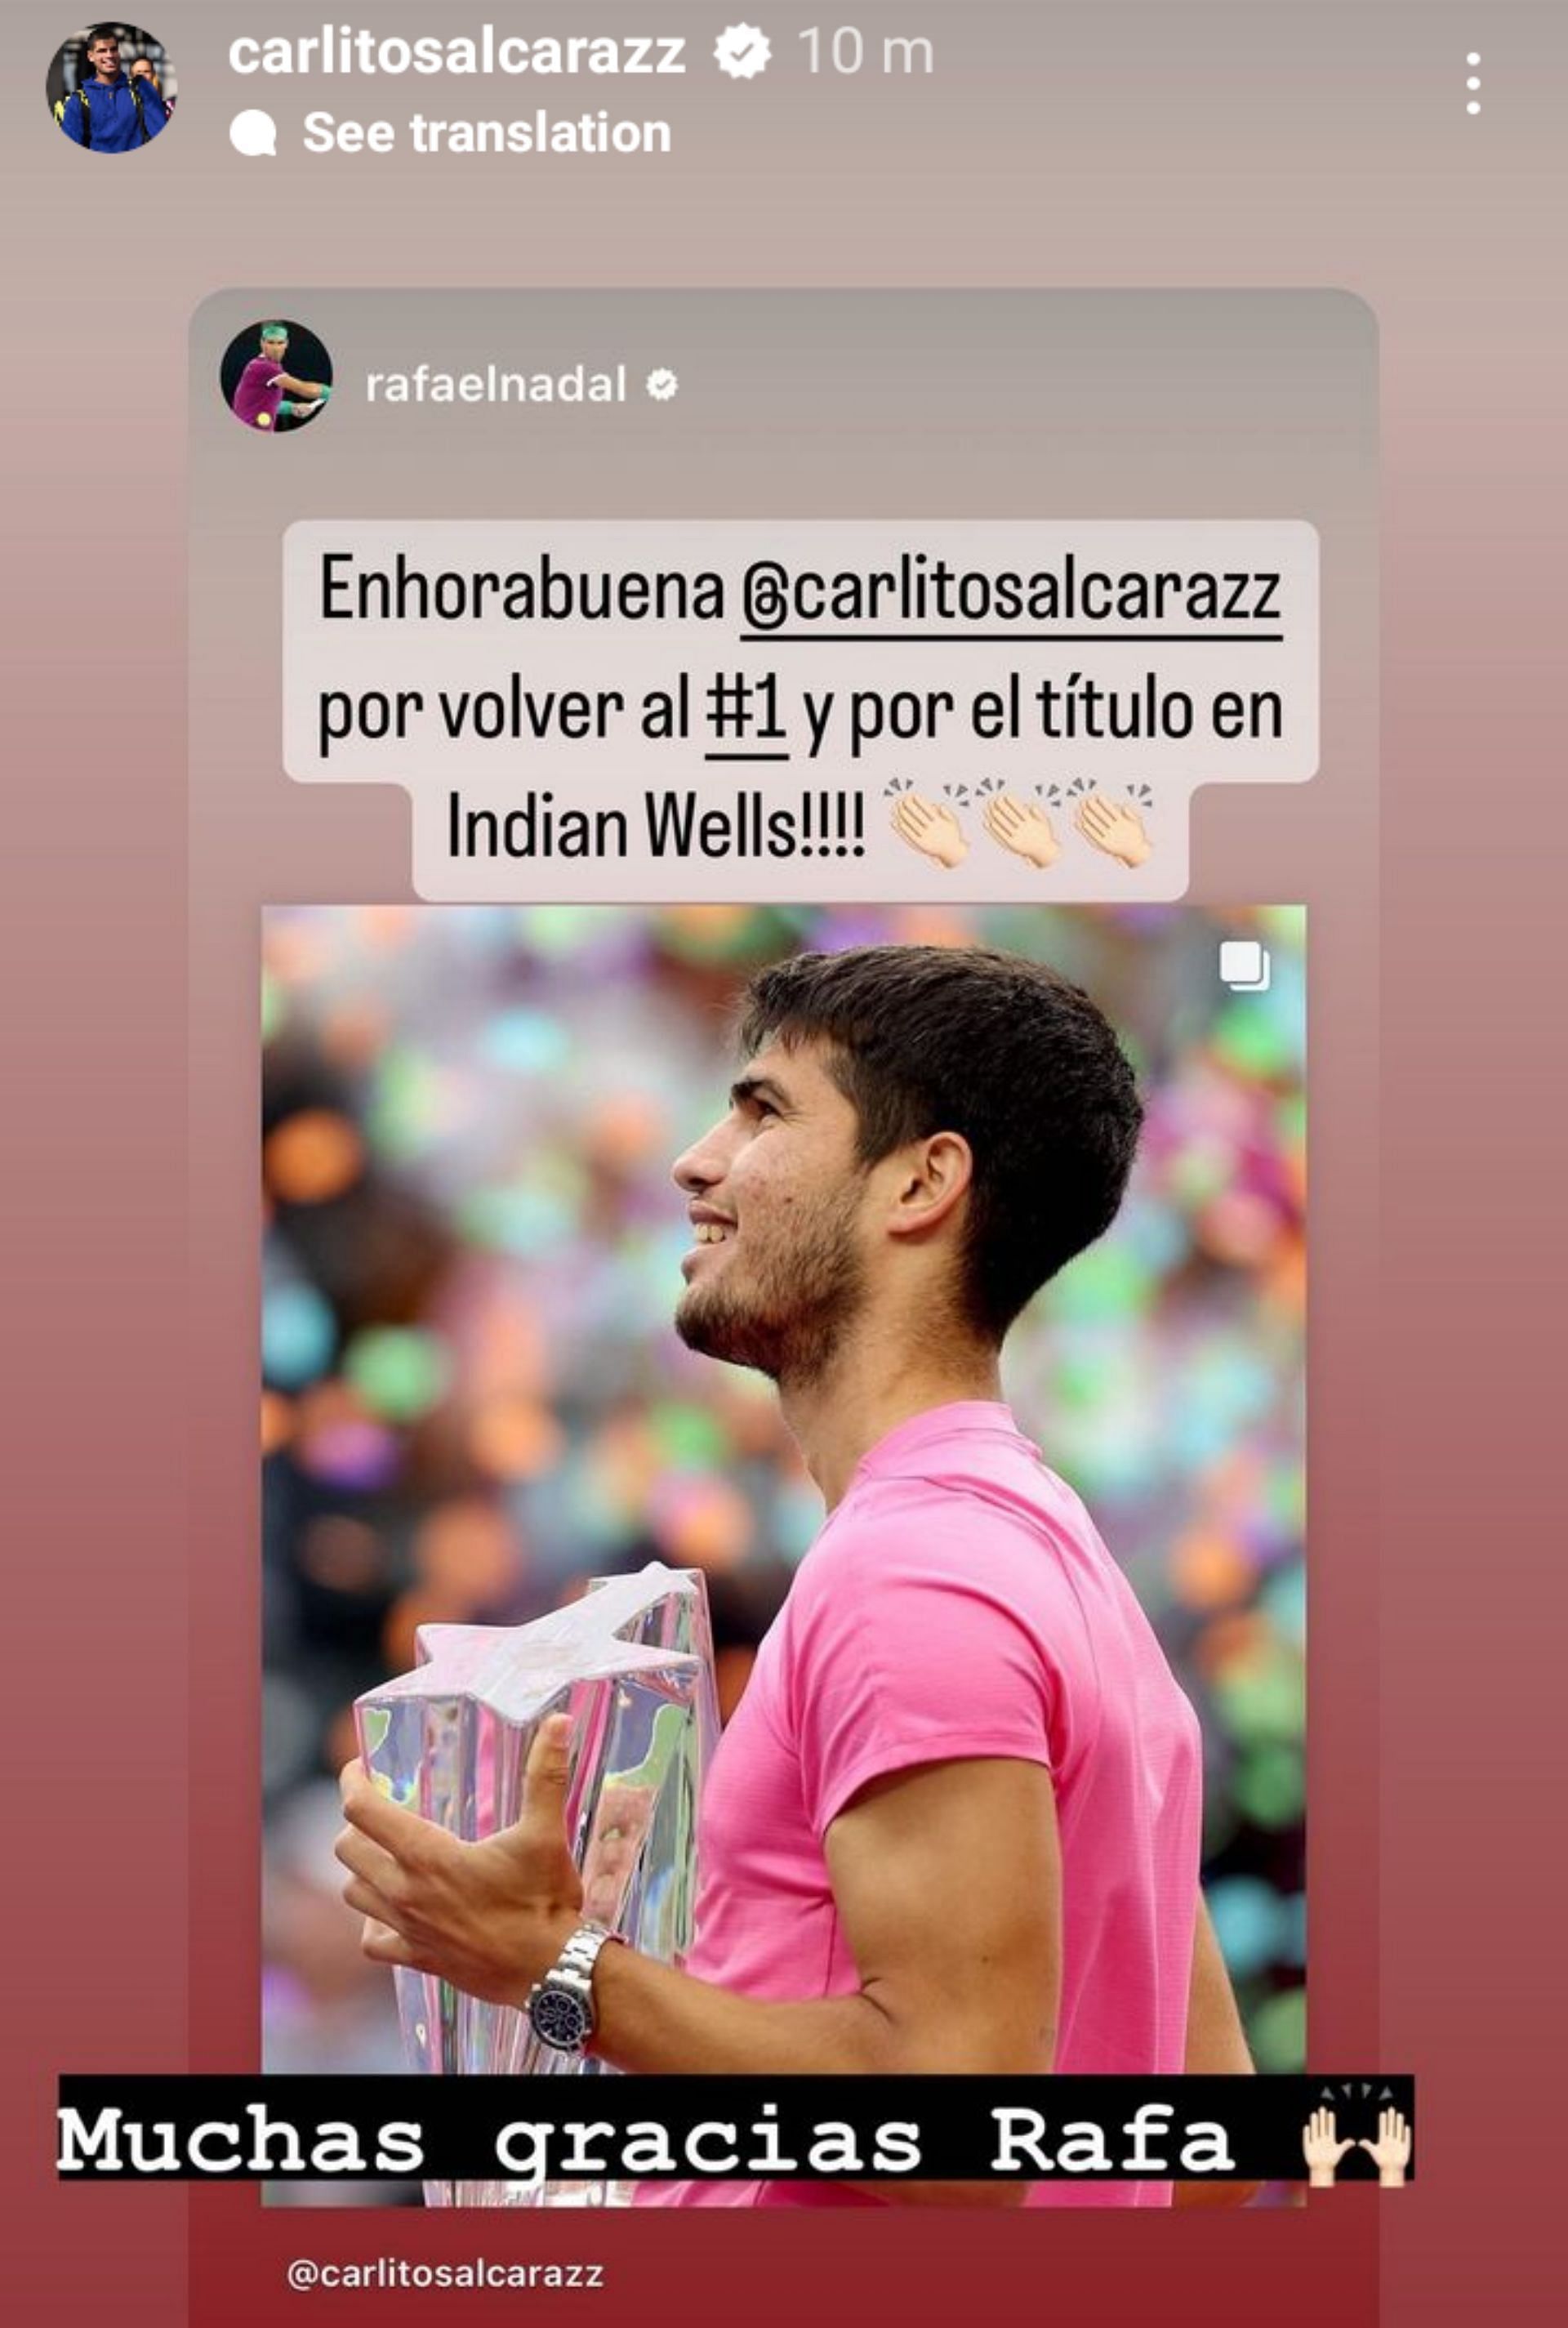 Alcaraz wrote on his Instagram stories